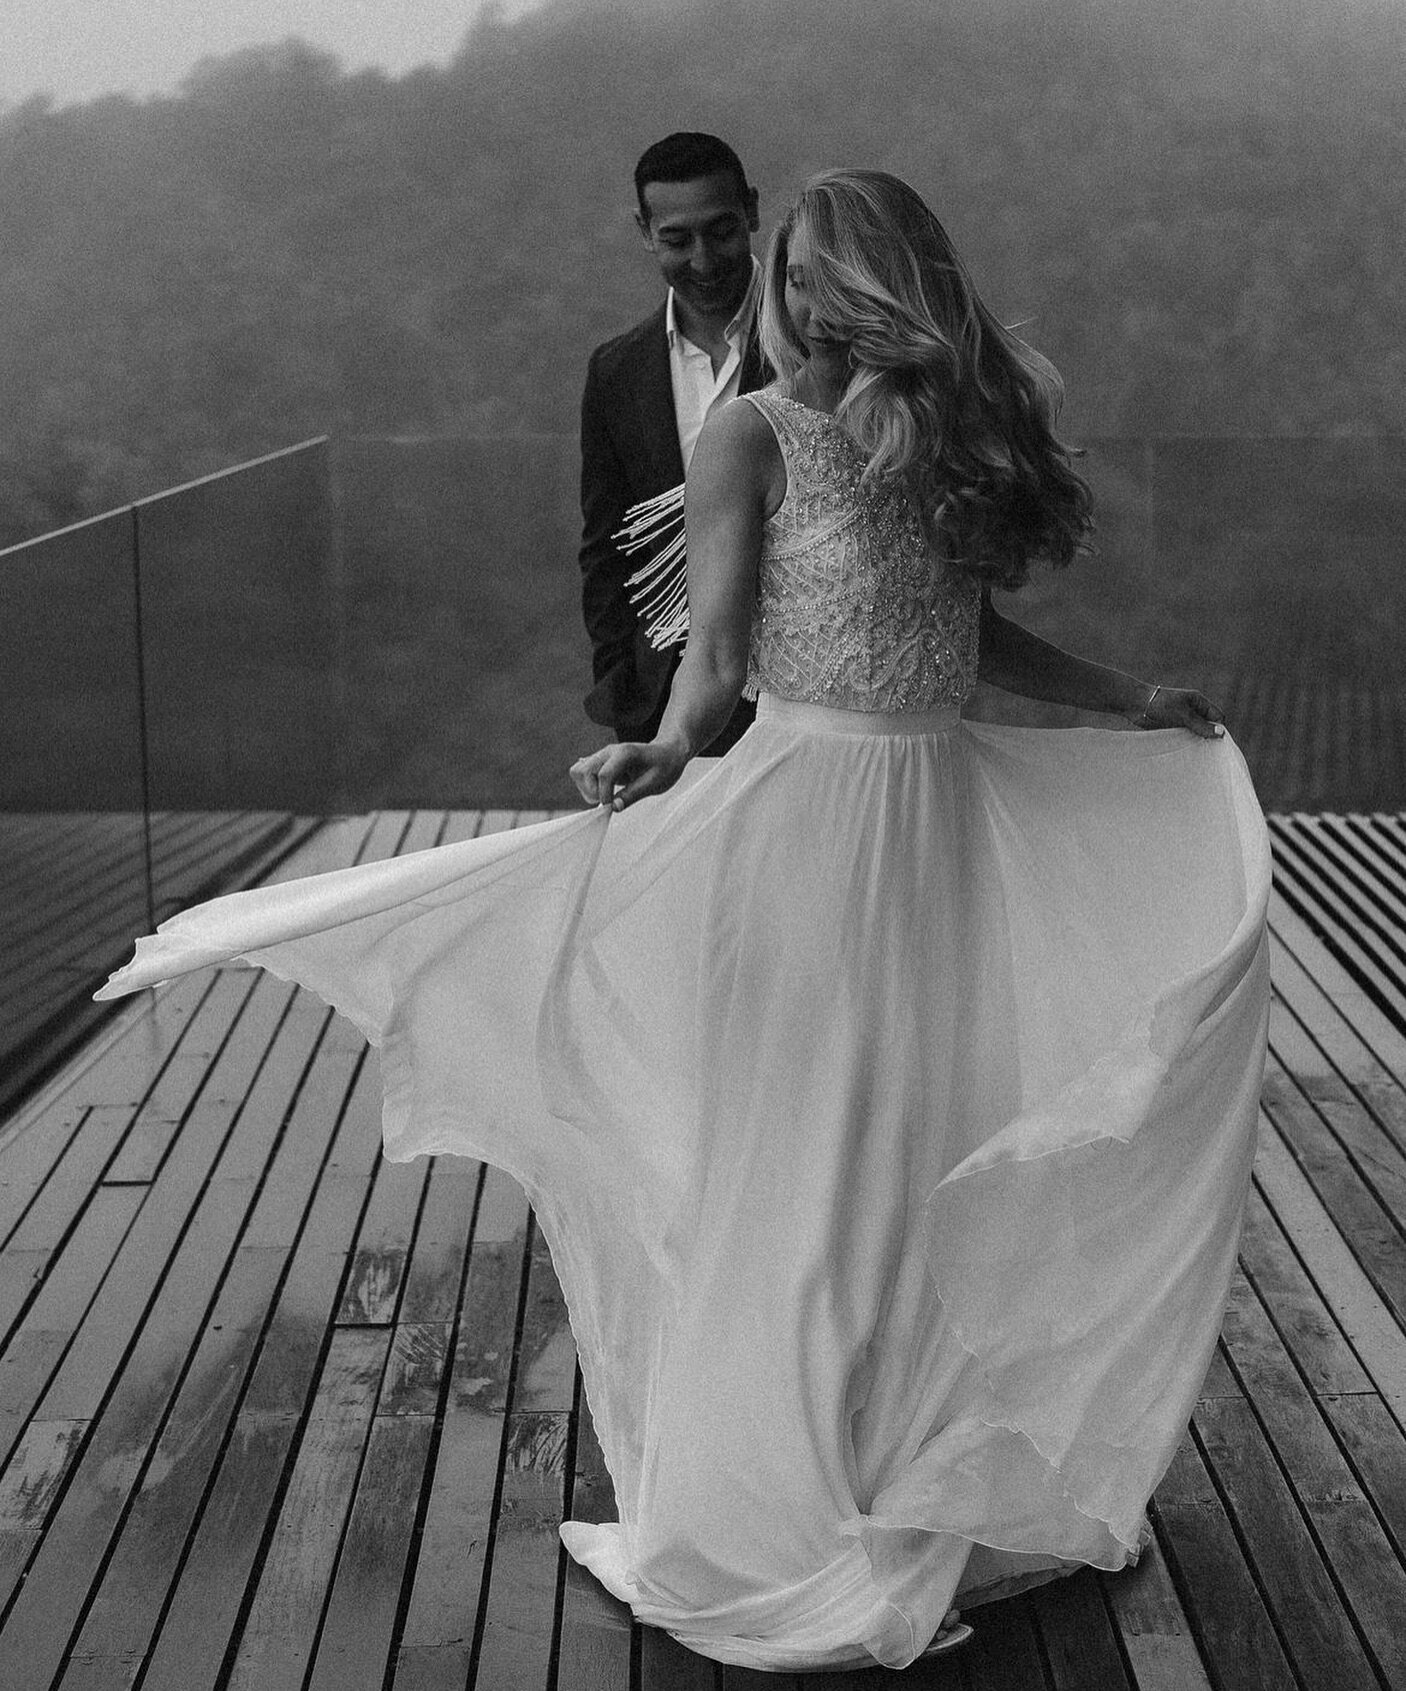 Real Bride | Breathtaking moments of Taryn in the Flynn Topper and Summer Skirt. 

@adventureinstead 

#elopementstyle #bridalseparates #australianbridal #justmarried #realbride